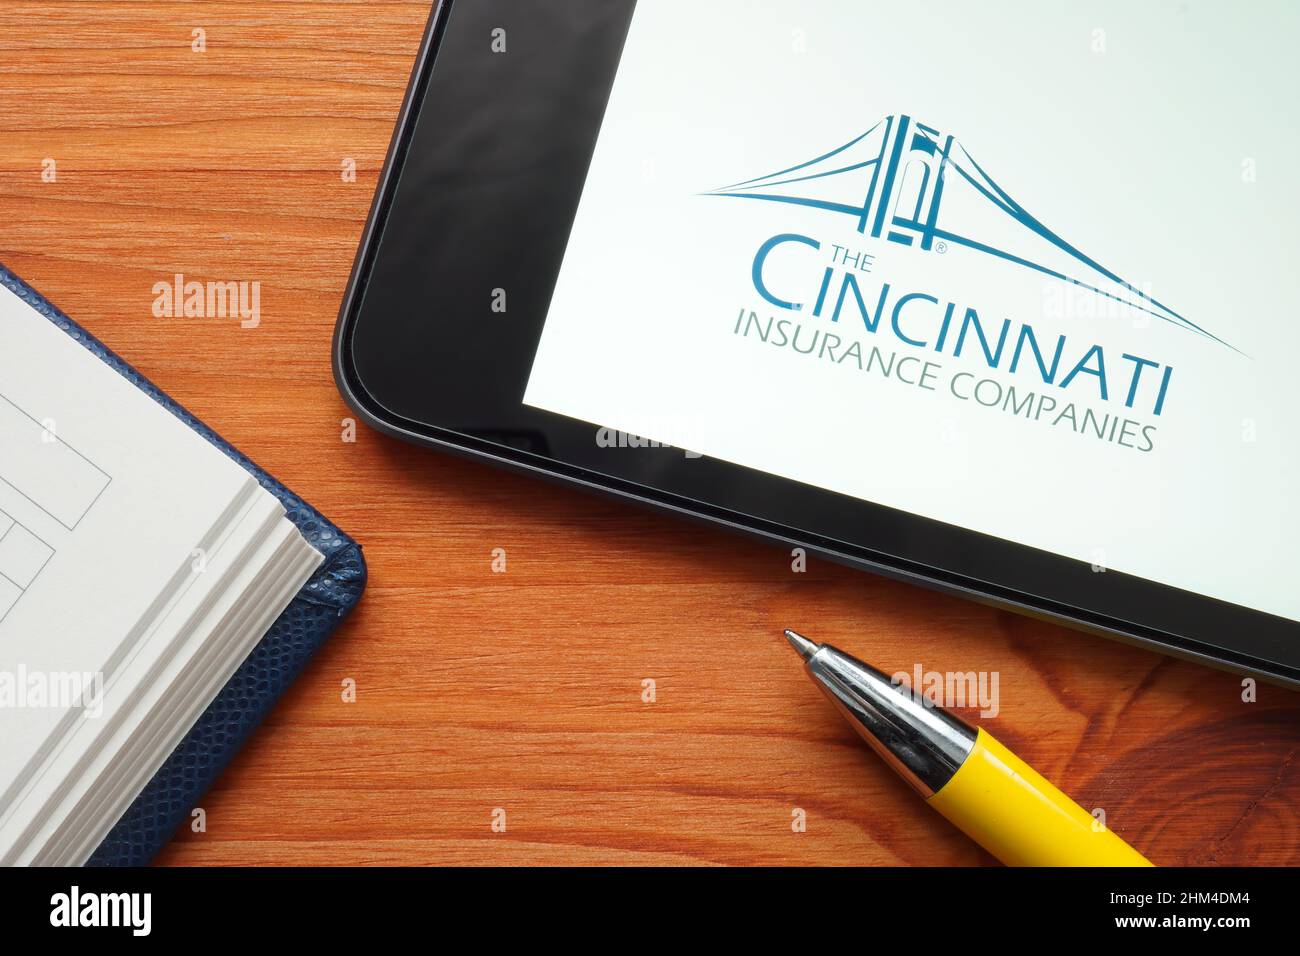 KYIV, UKRAINE - January 27, 2022. The Cincinnati Insurance Companies logo and pen. Stock Photo